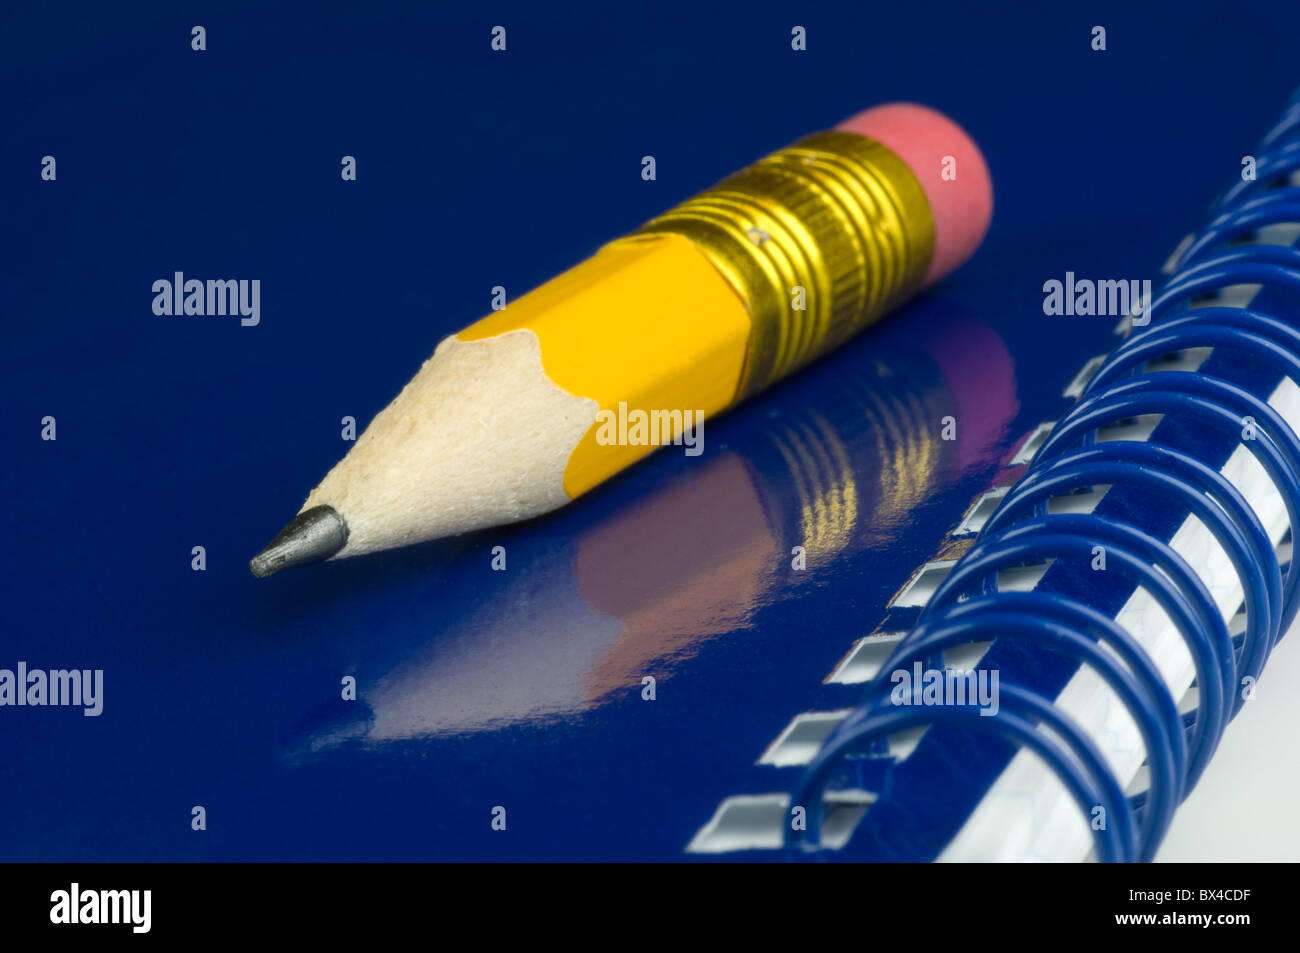 Pencil and memo pad Stock Photo